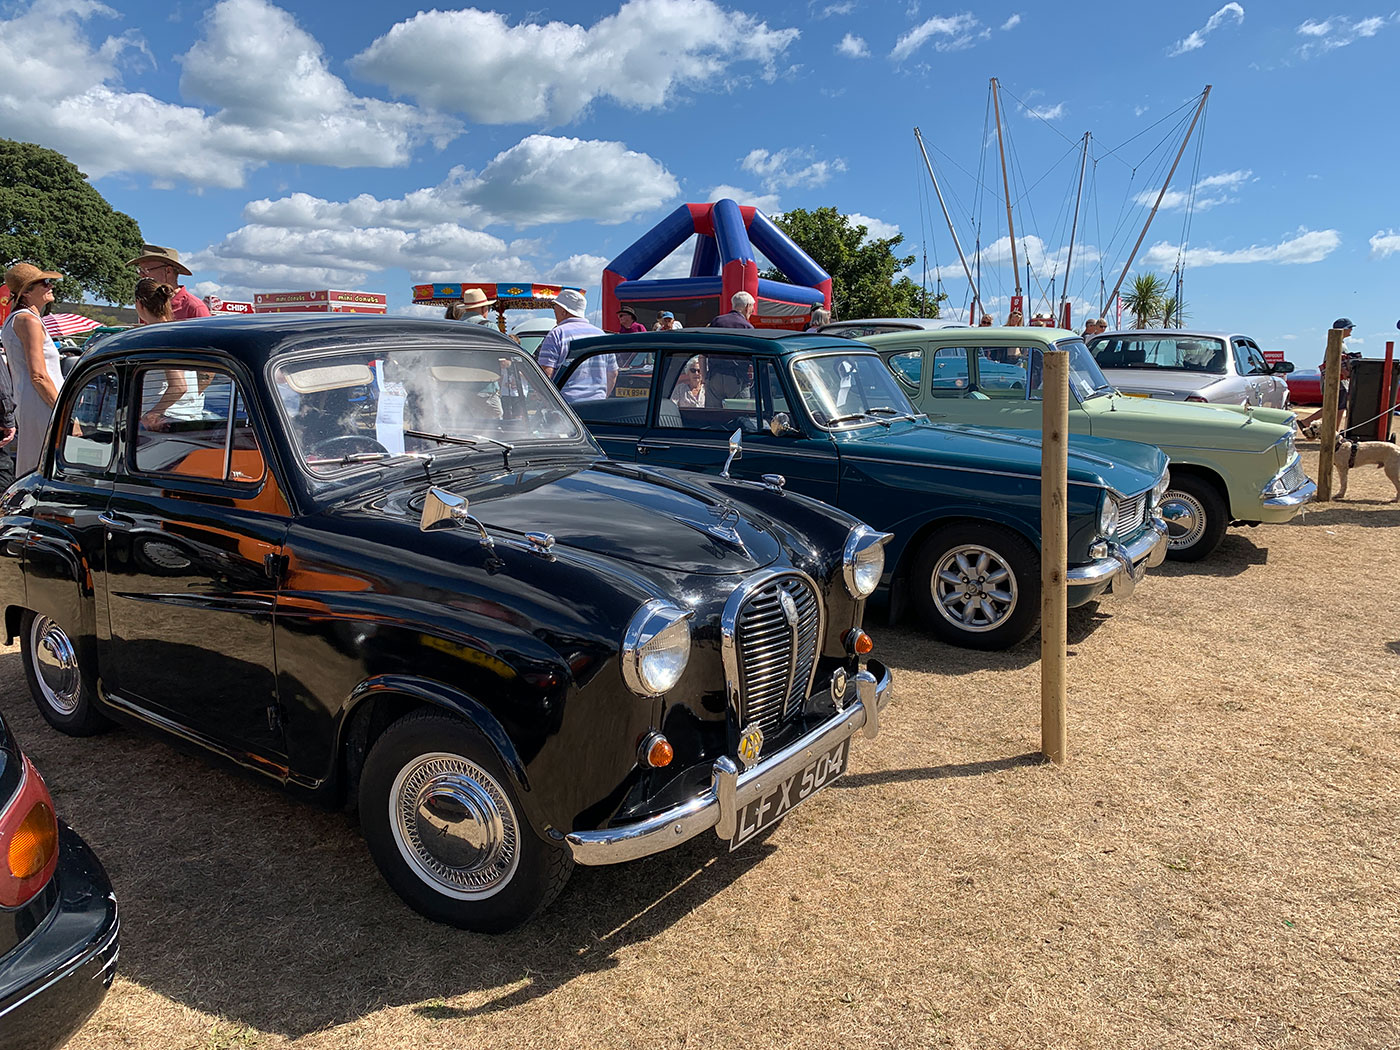 Carnival Classic Car Show